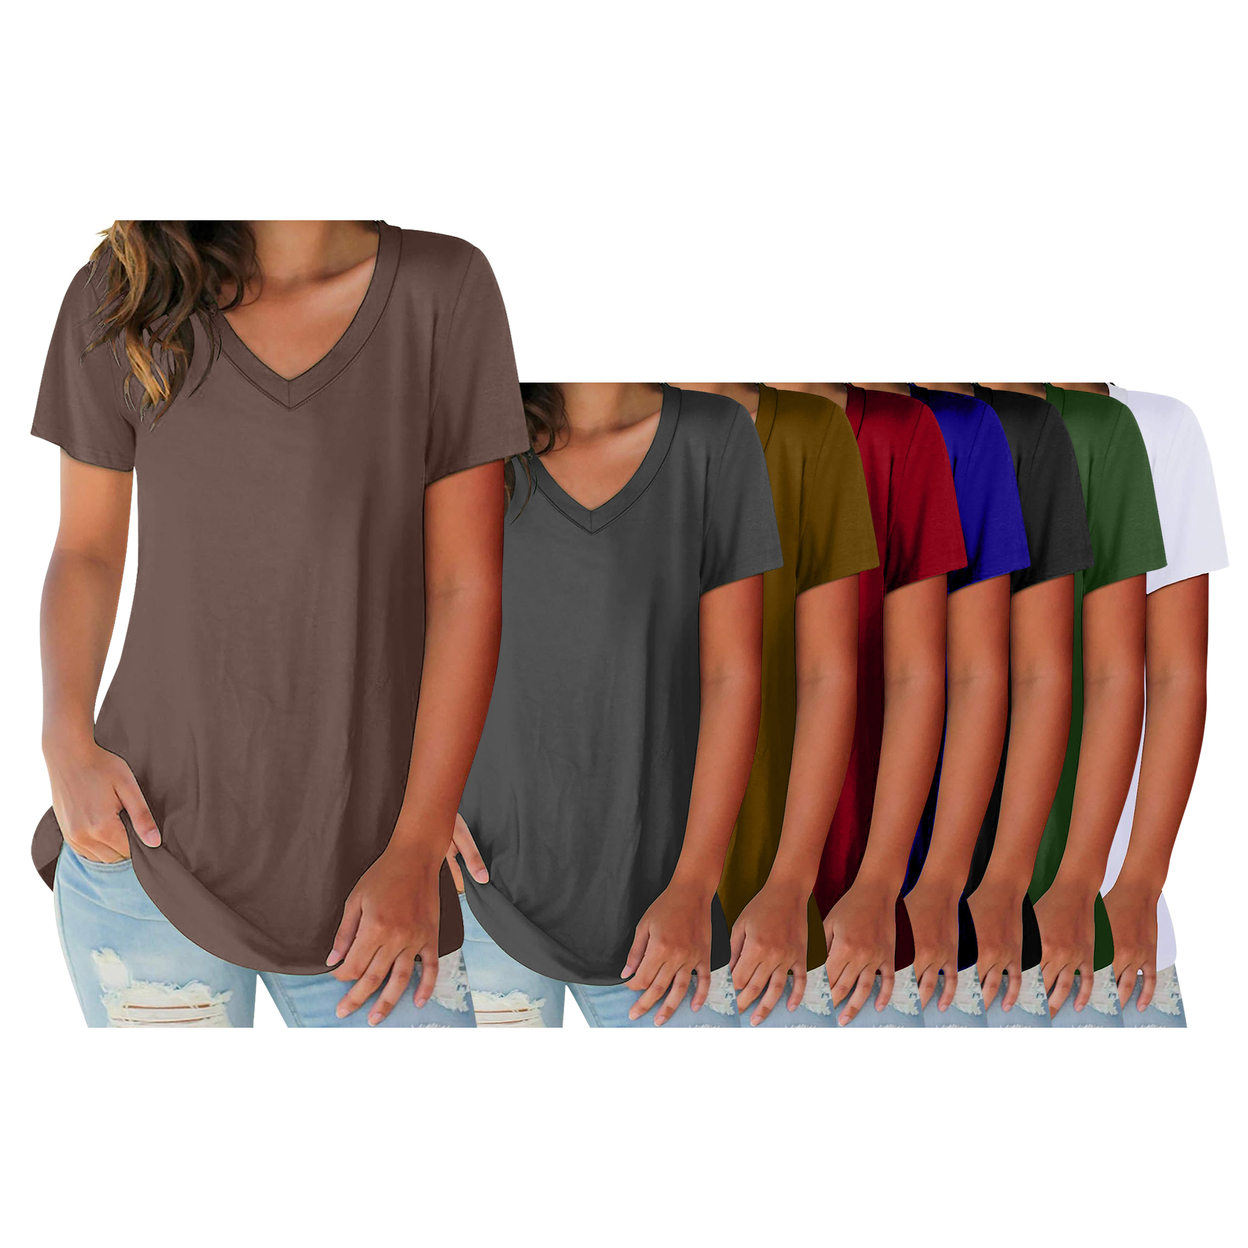 3-Pack: Women's Ultra Soft Smooth Cotton Blend Basic V-Neck Short Sleeve Shirts - Black, Navy, Green, X-large